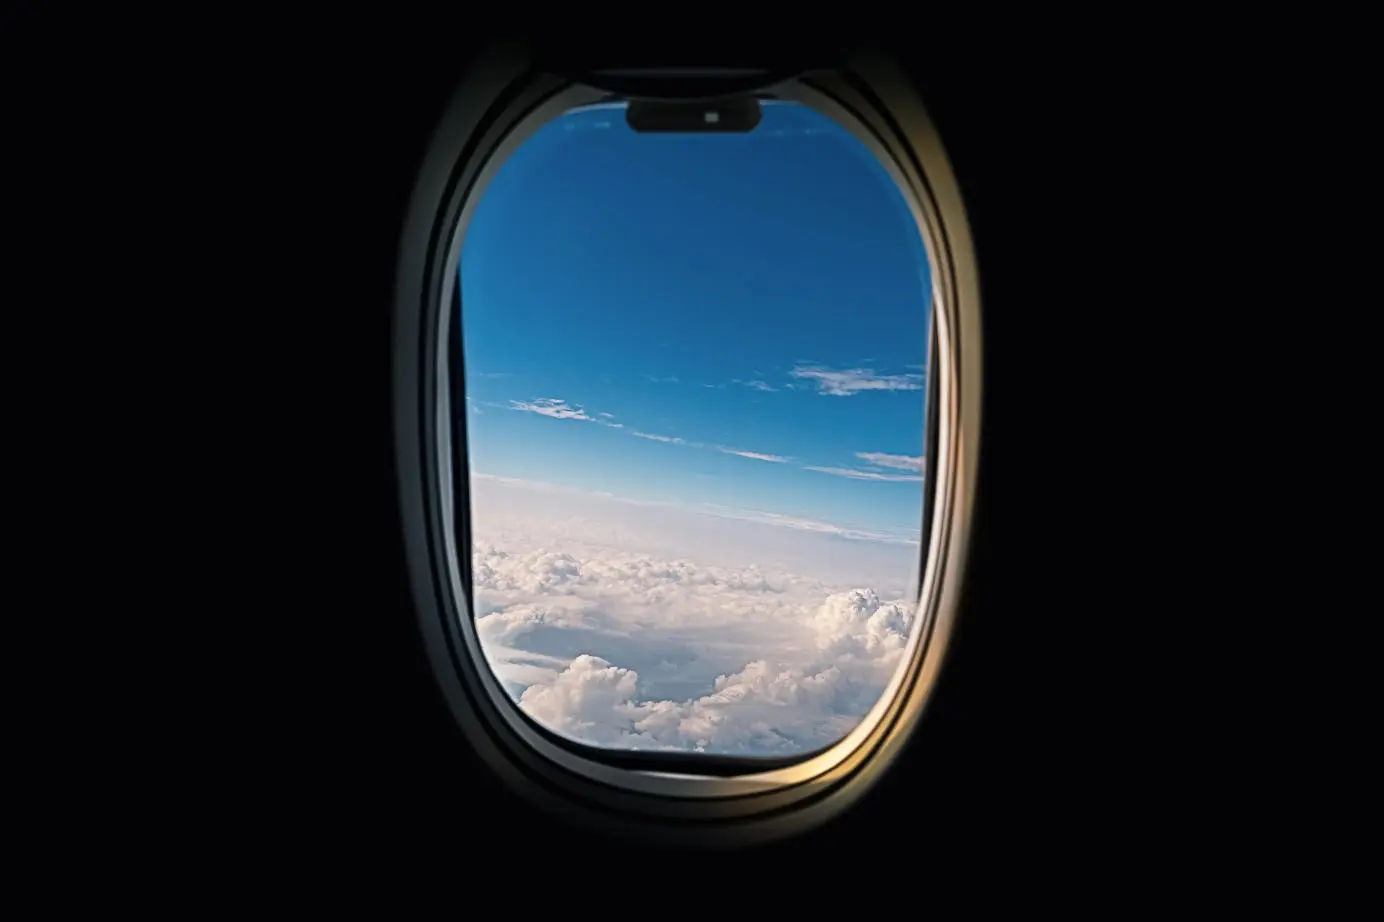 The holes in airplane windows help regulate air pressure